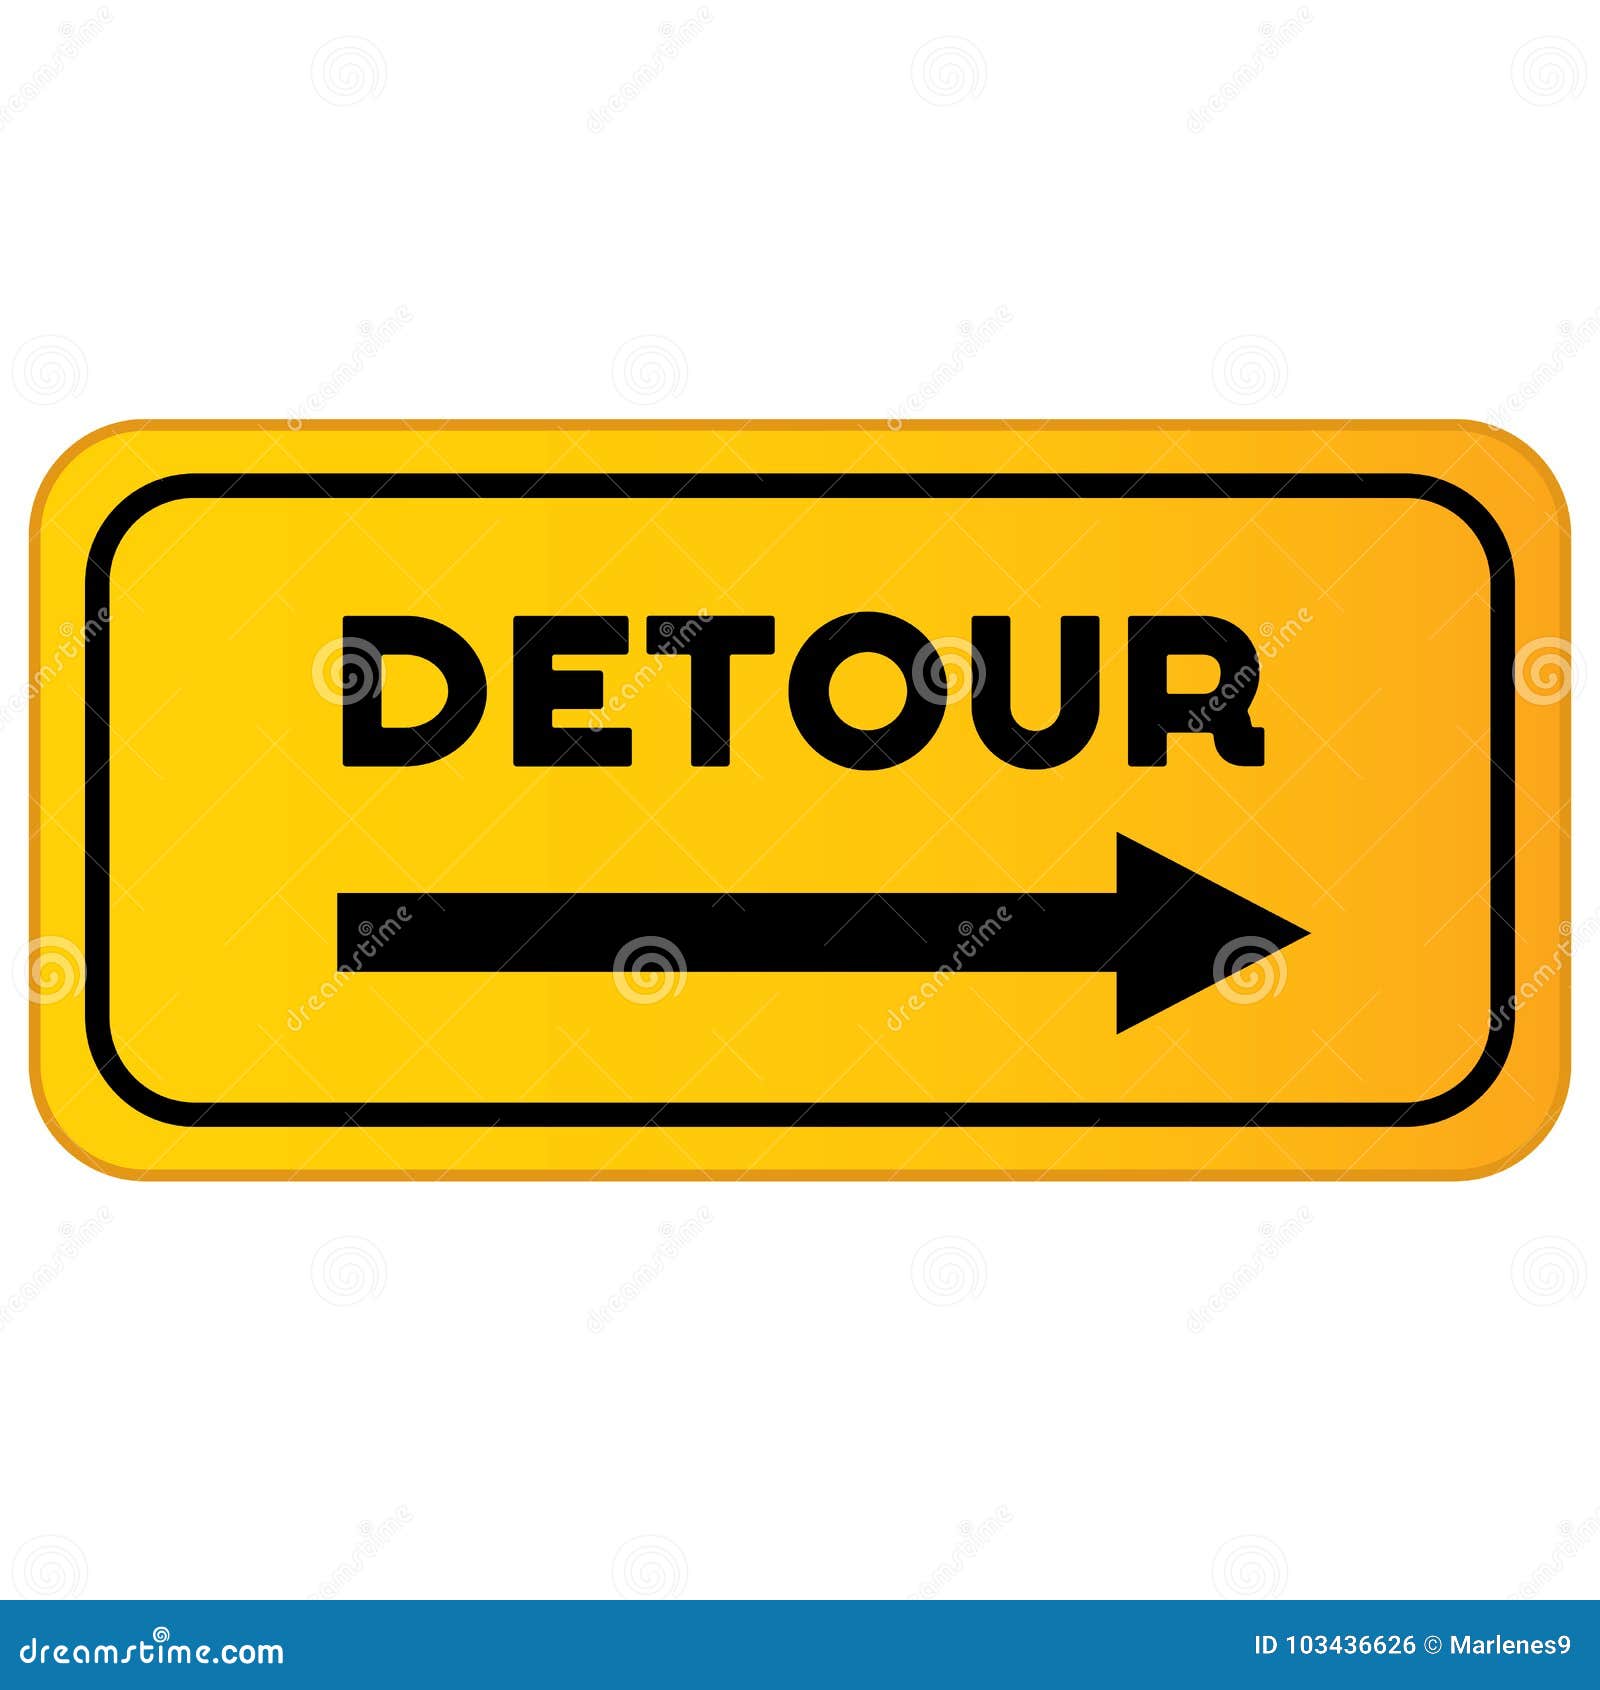  detour road sign